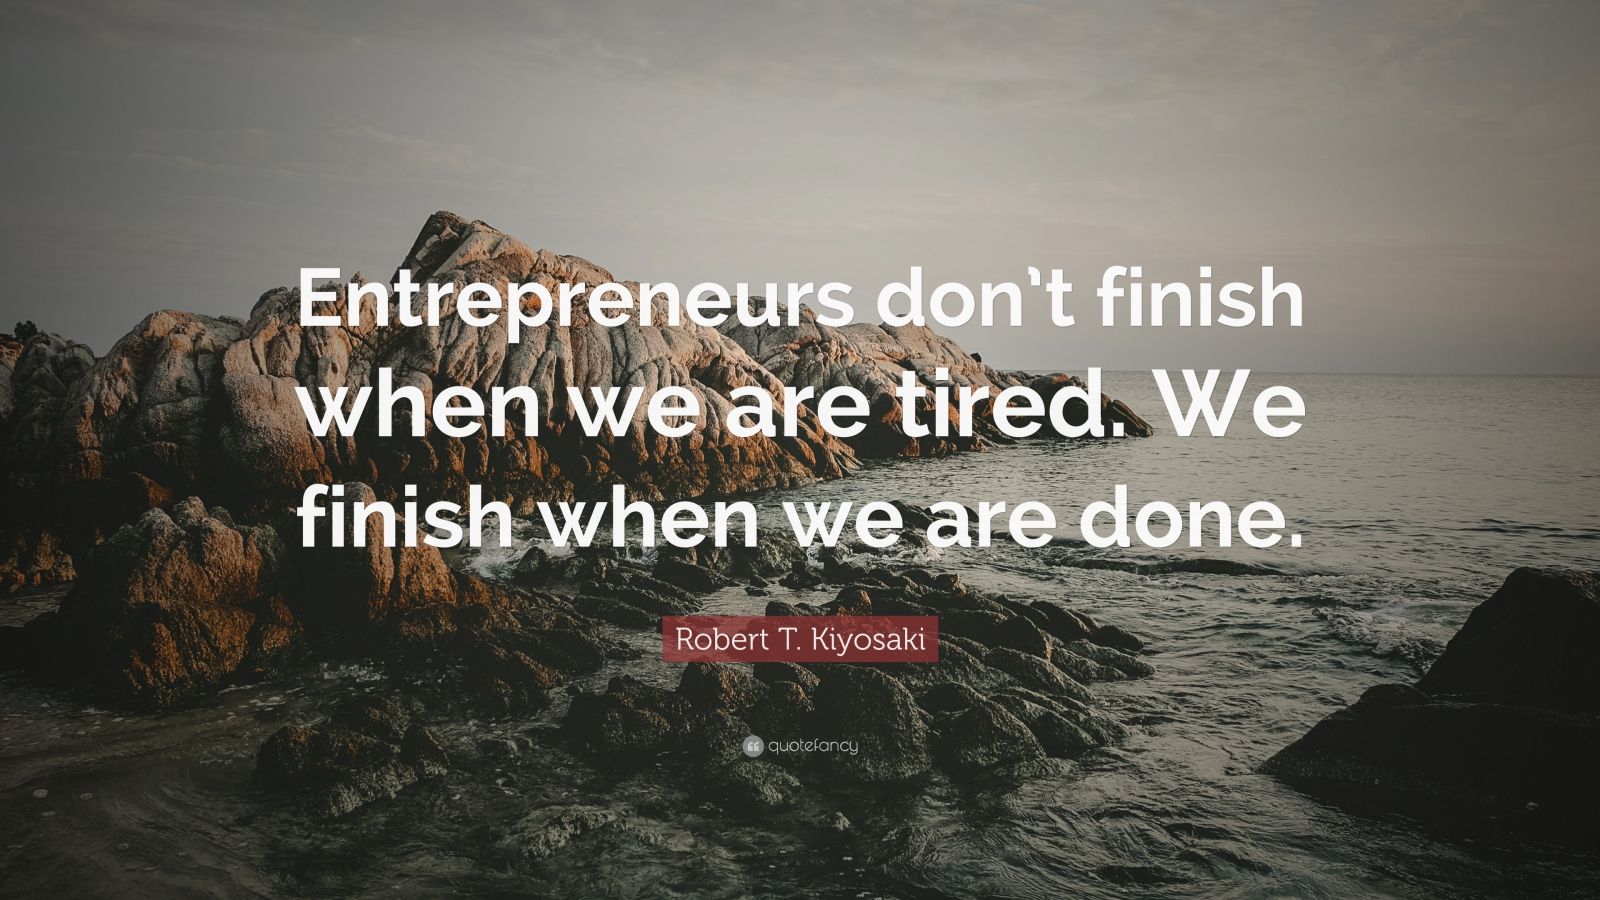 Robert T. Kiyosaki Quote: “Entrepreneurs don’t finish when we are tired